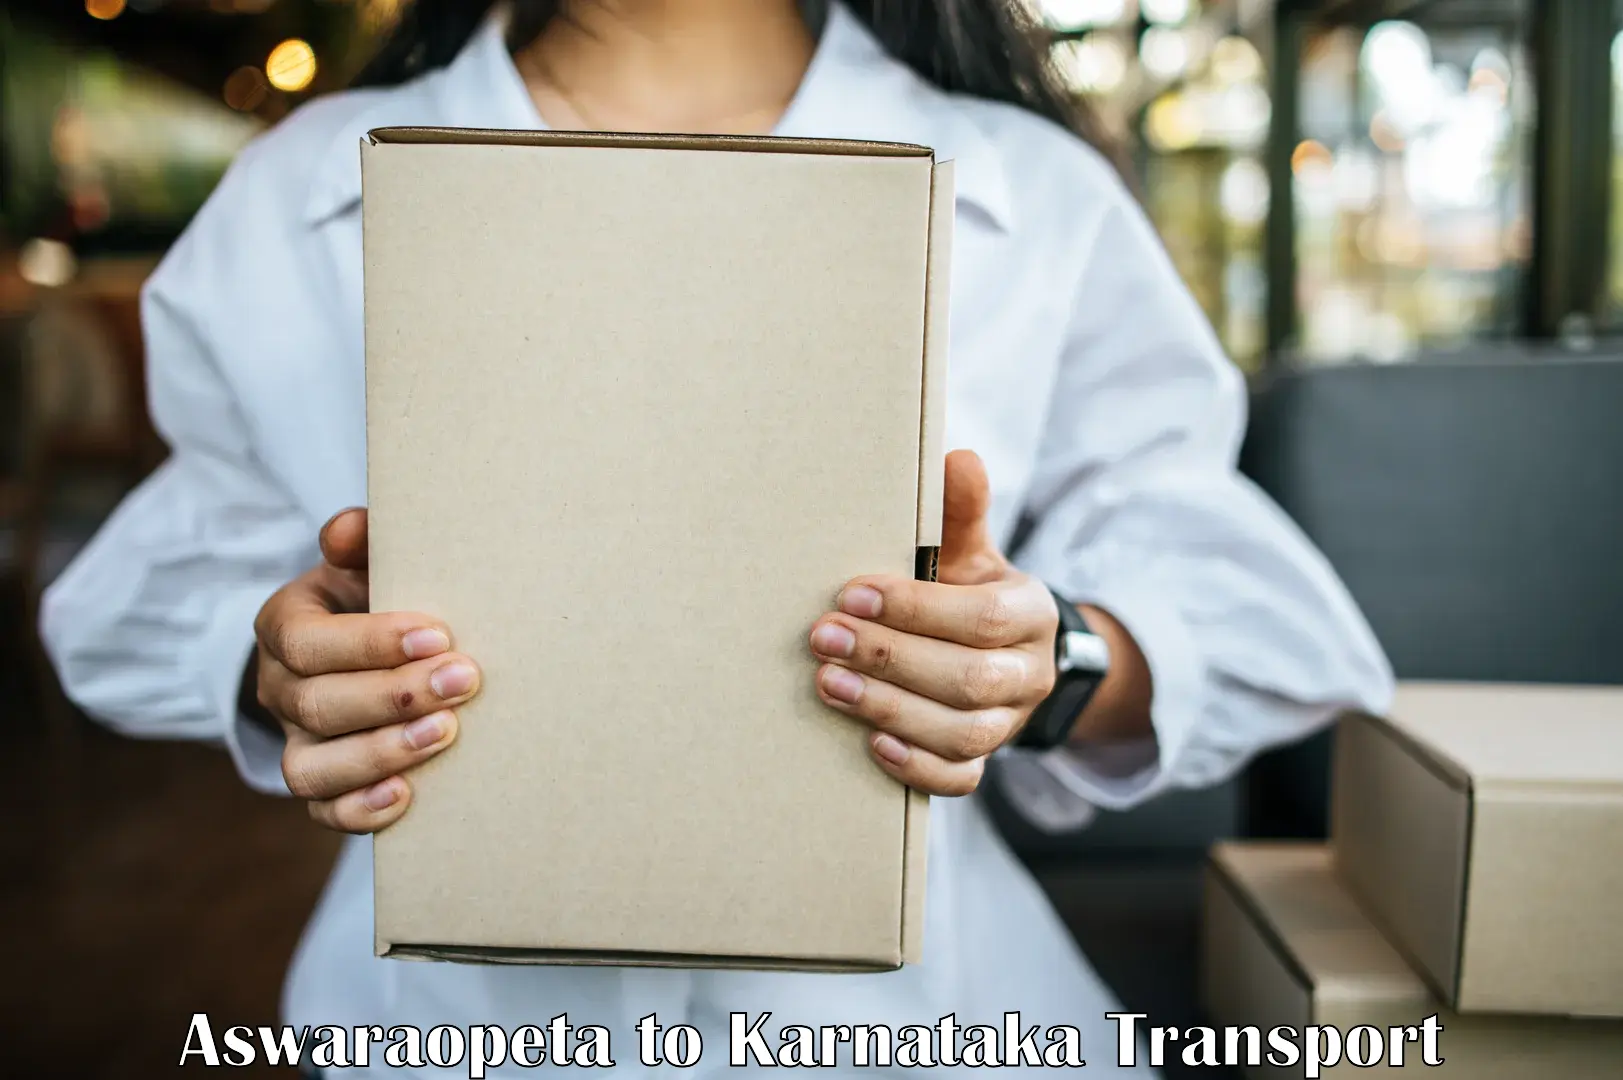 Transport in sharing Aswaraopeta to Hubli